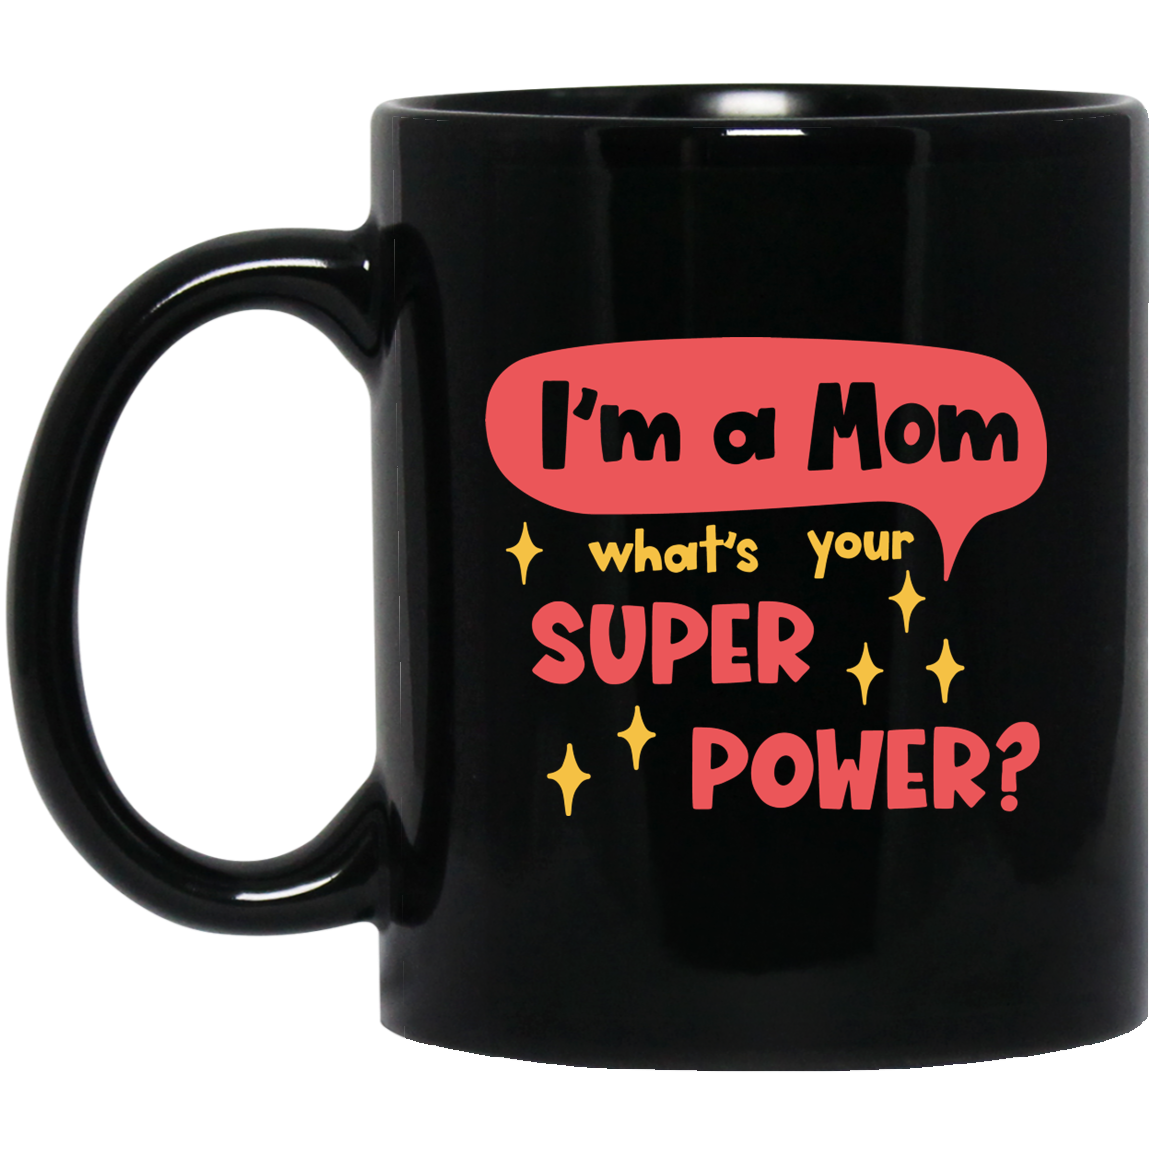 Super Power 11 oz. Black Mug